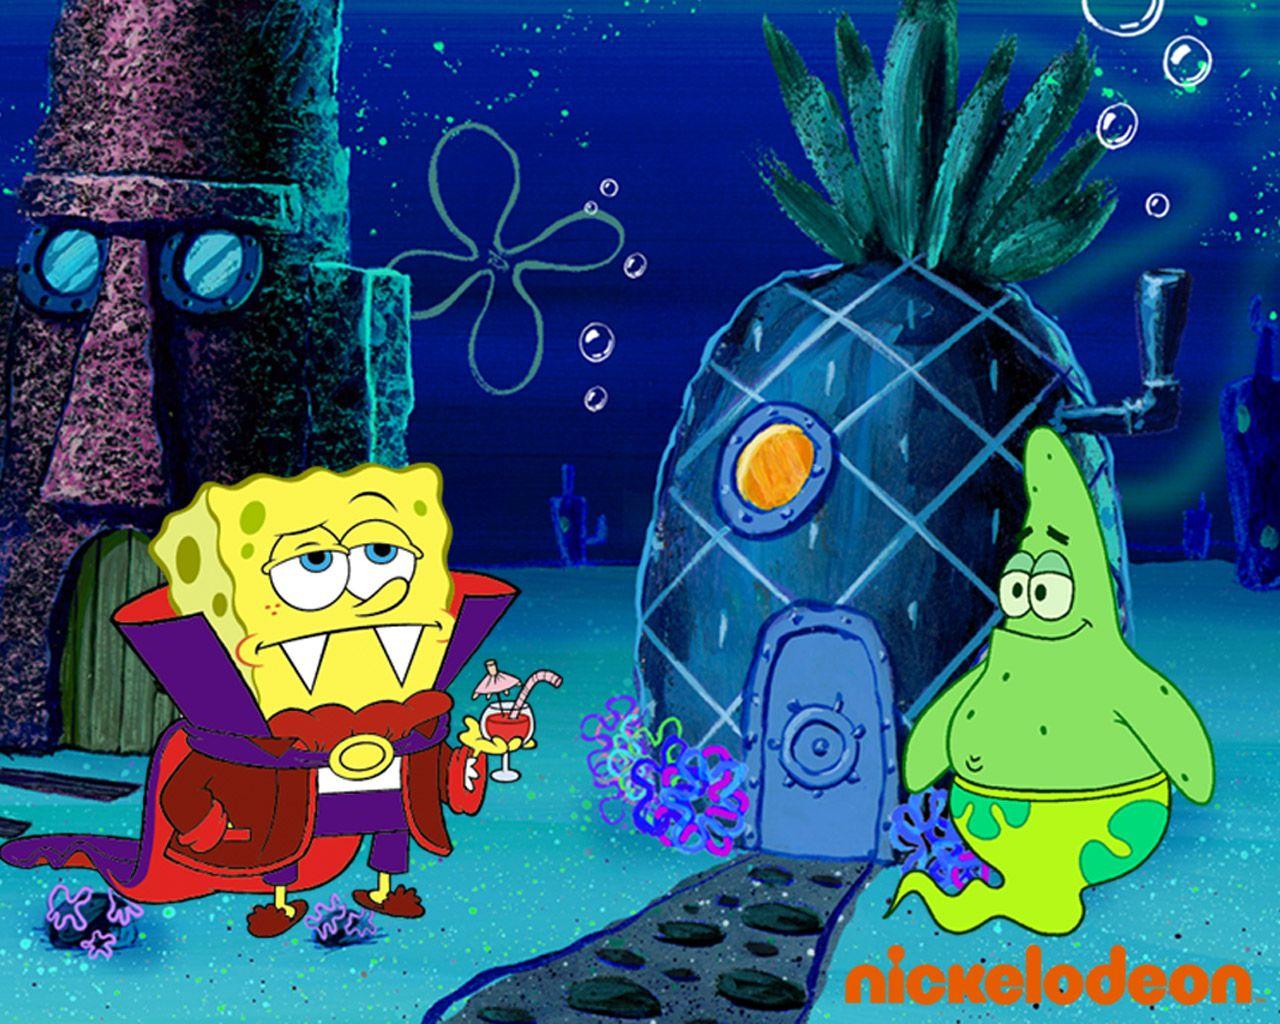 Spongebob Squarepants Wallpaper: Spongebob & Patrick. Spongebob wallpaper, Spongebob pics, Spongebob halloween